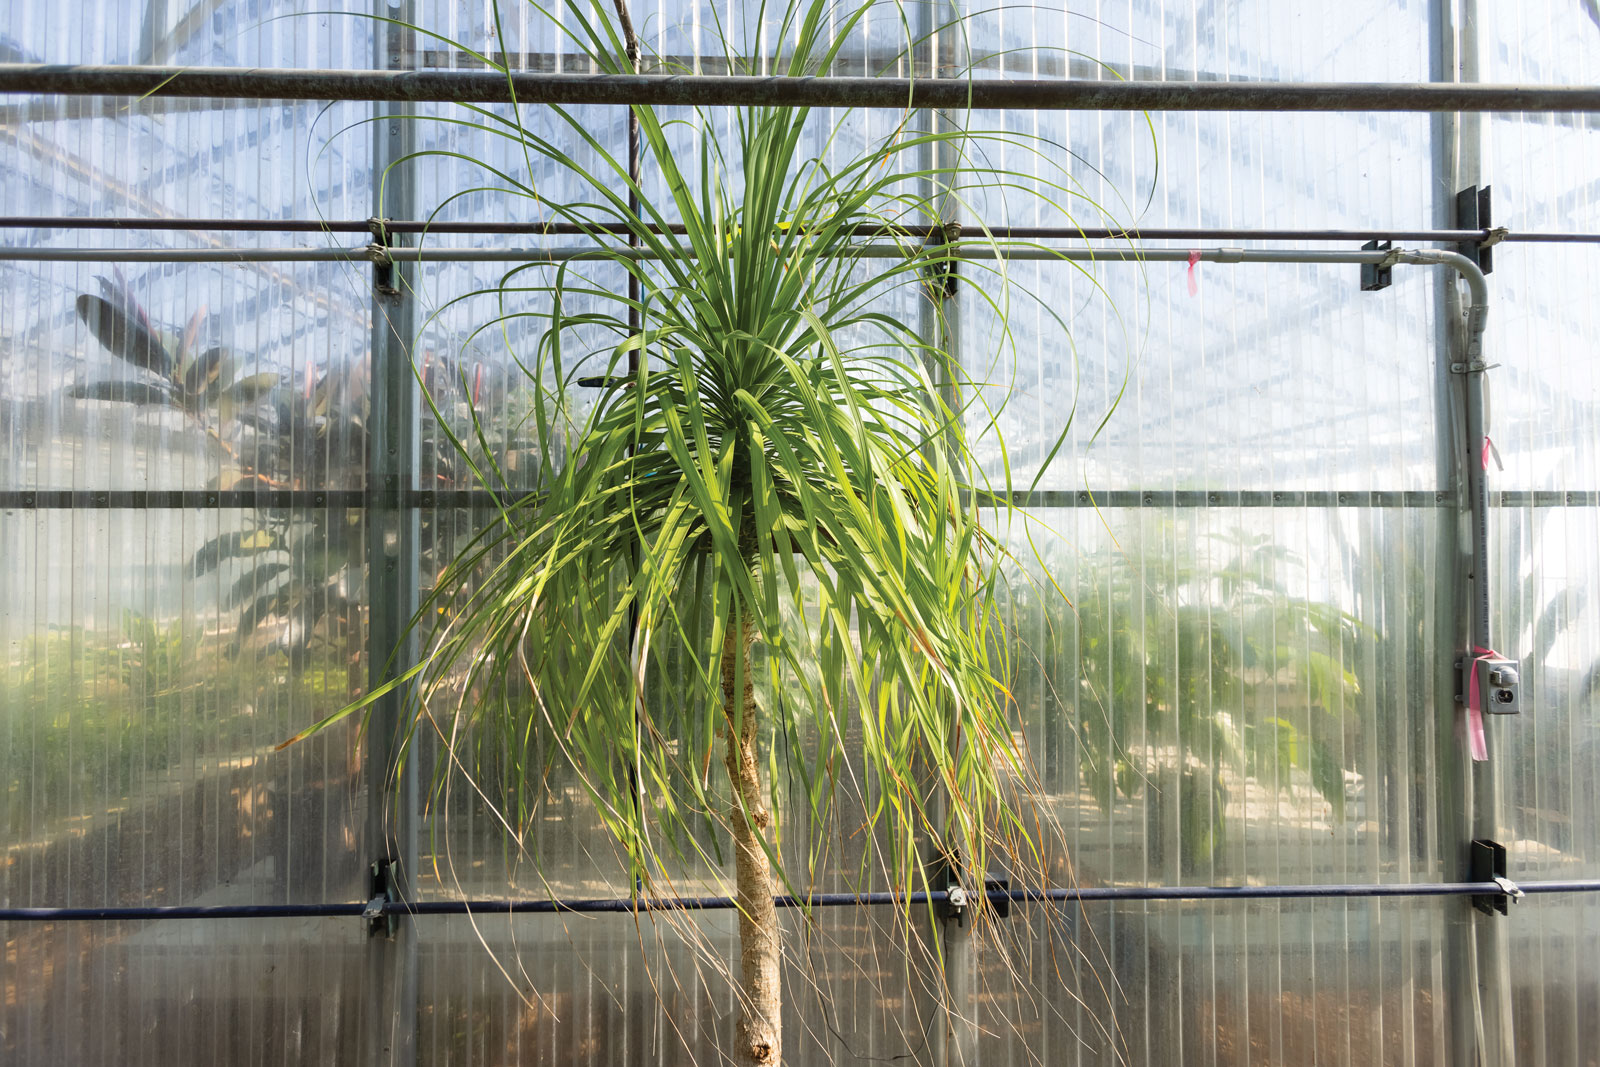 Giant Ponytail Palm at MU Greenhouse